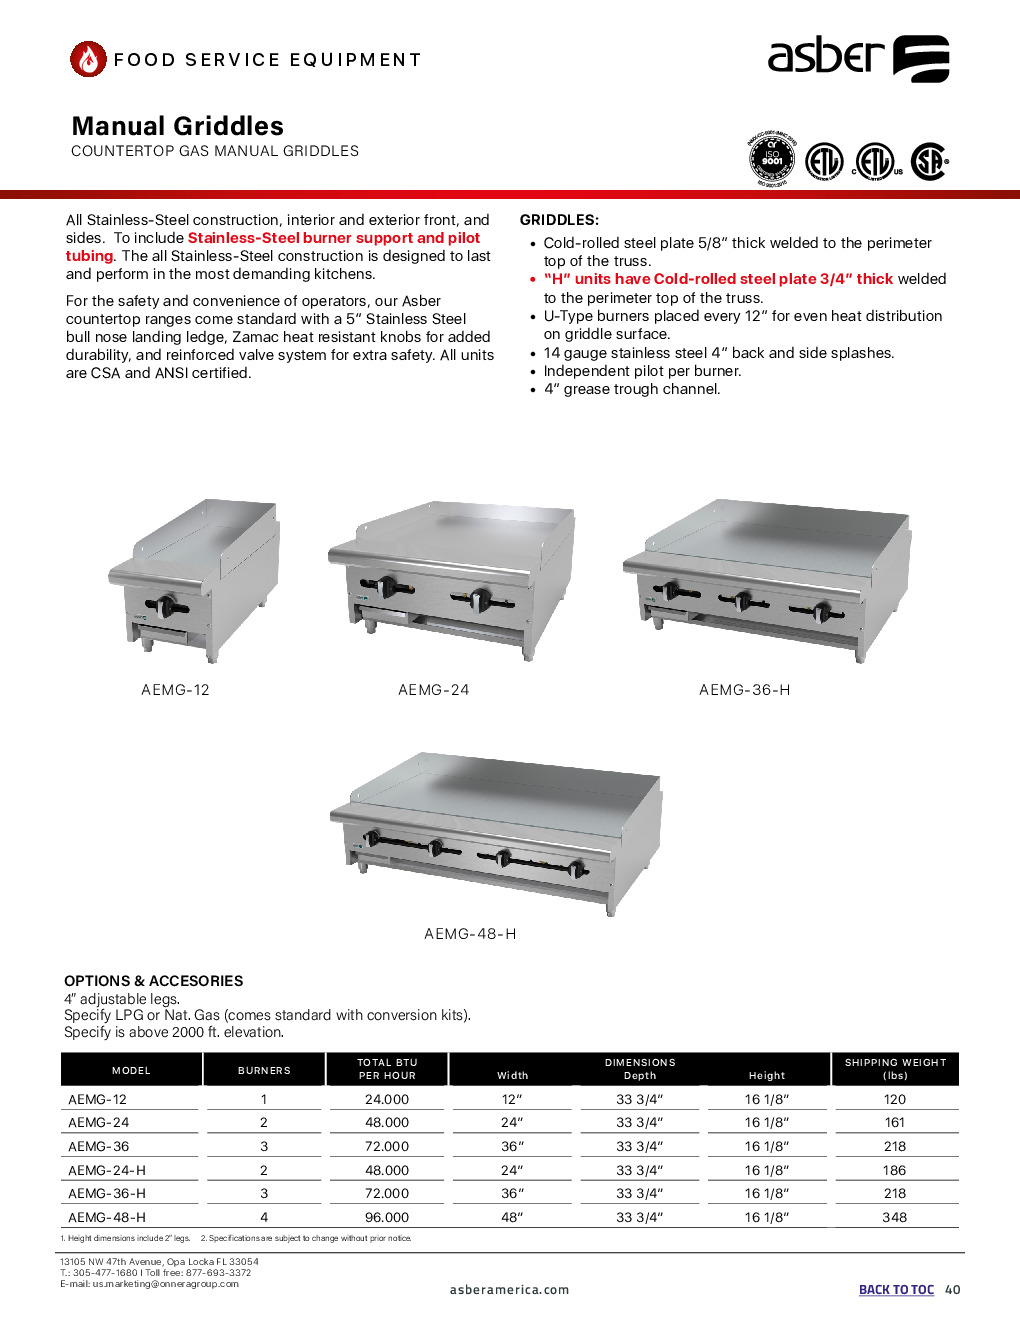 Asber AEMG-36 Countertop Gas Manual Griddle, 3 x 24,000 BTU - 36